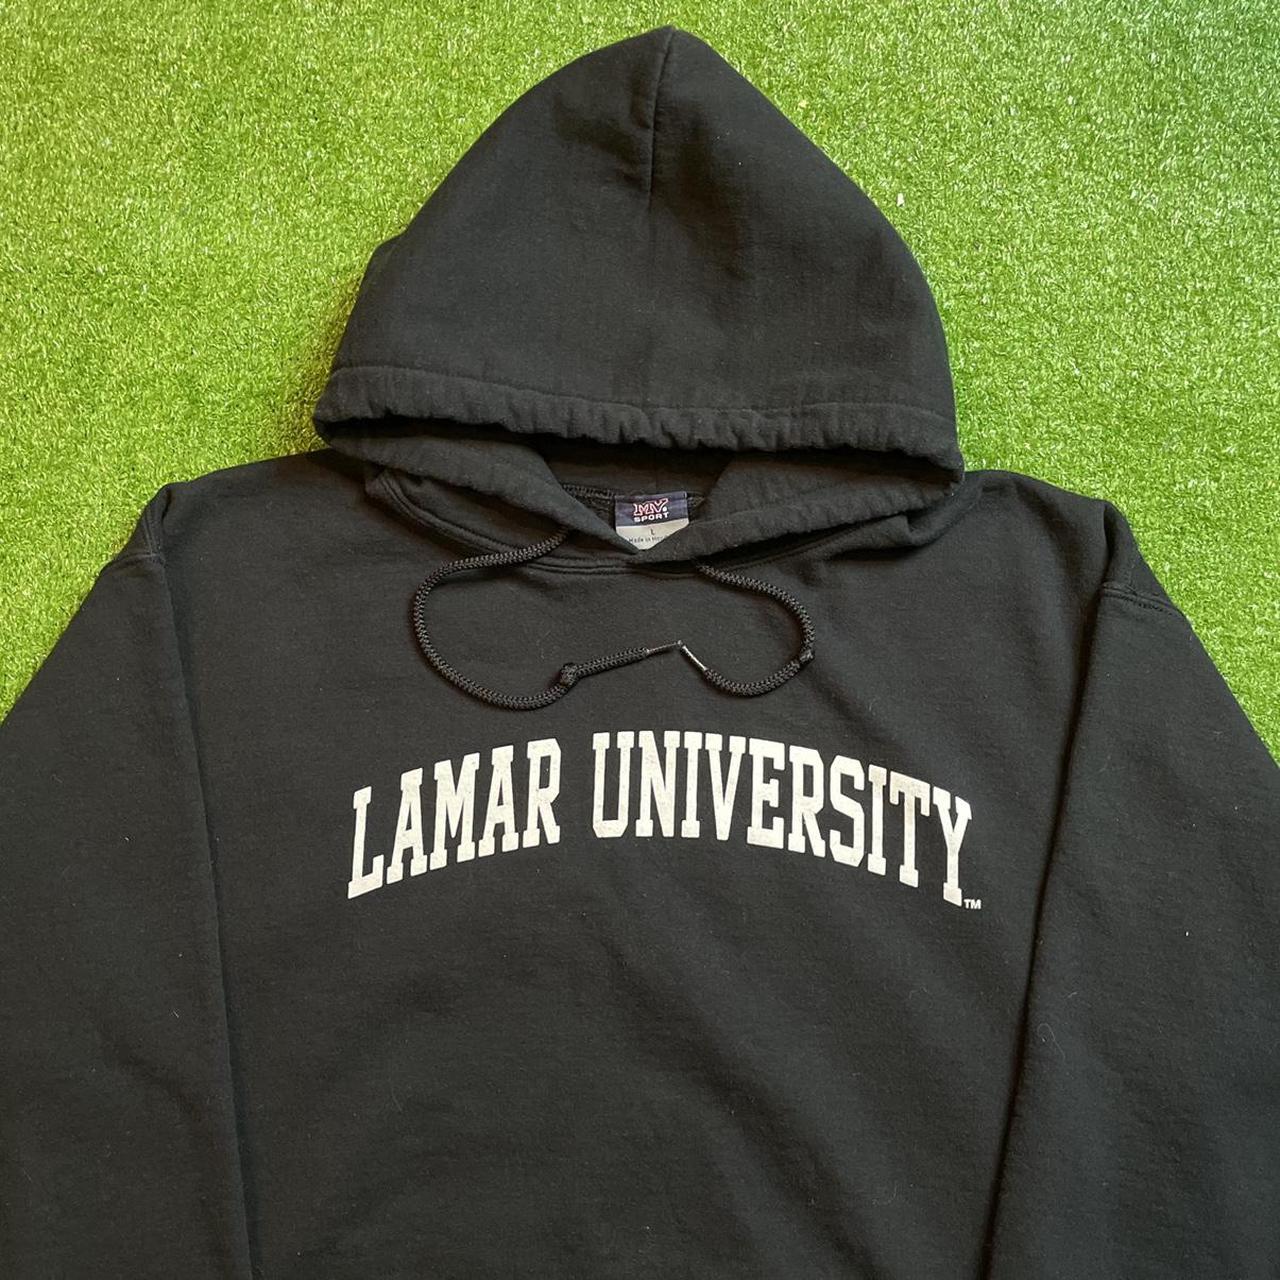 Product Image 1 - Vintage Lamar University Spellout College